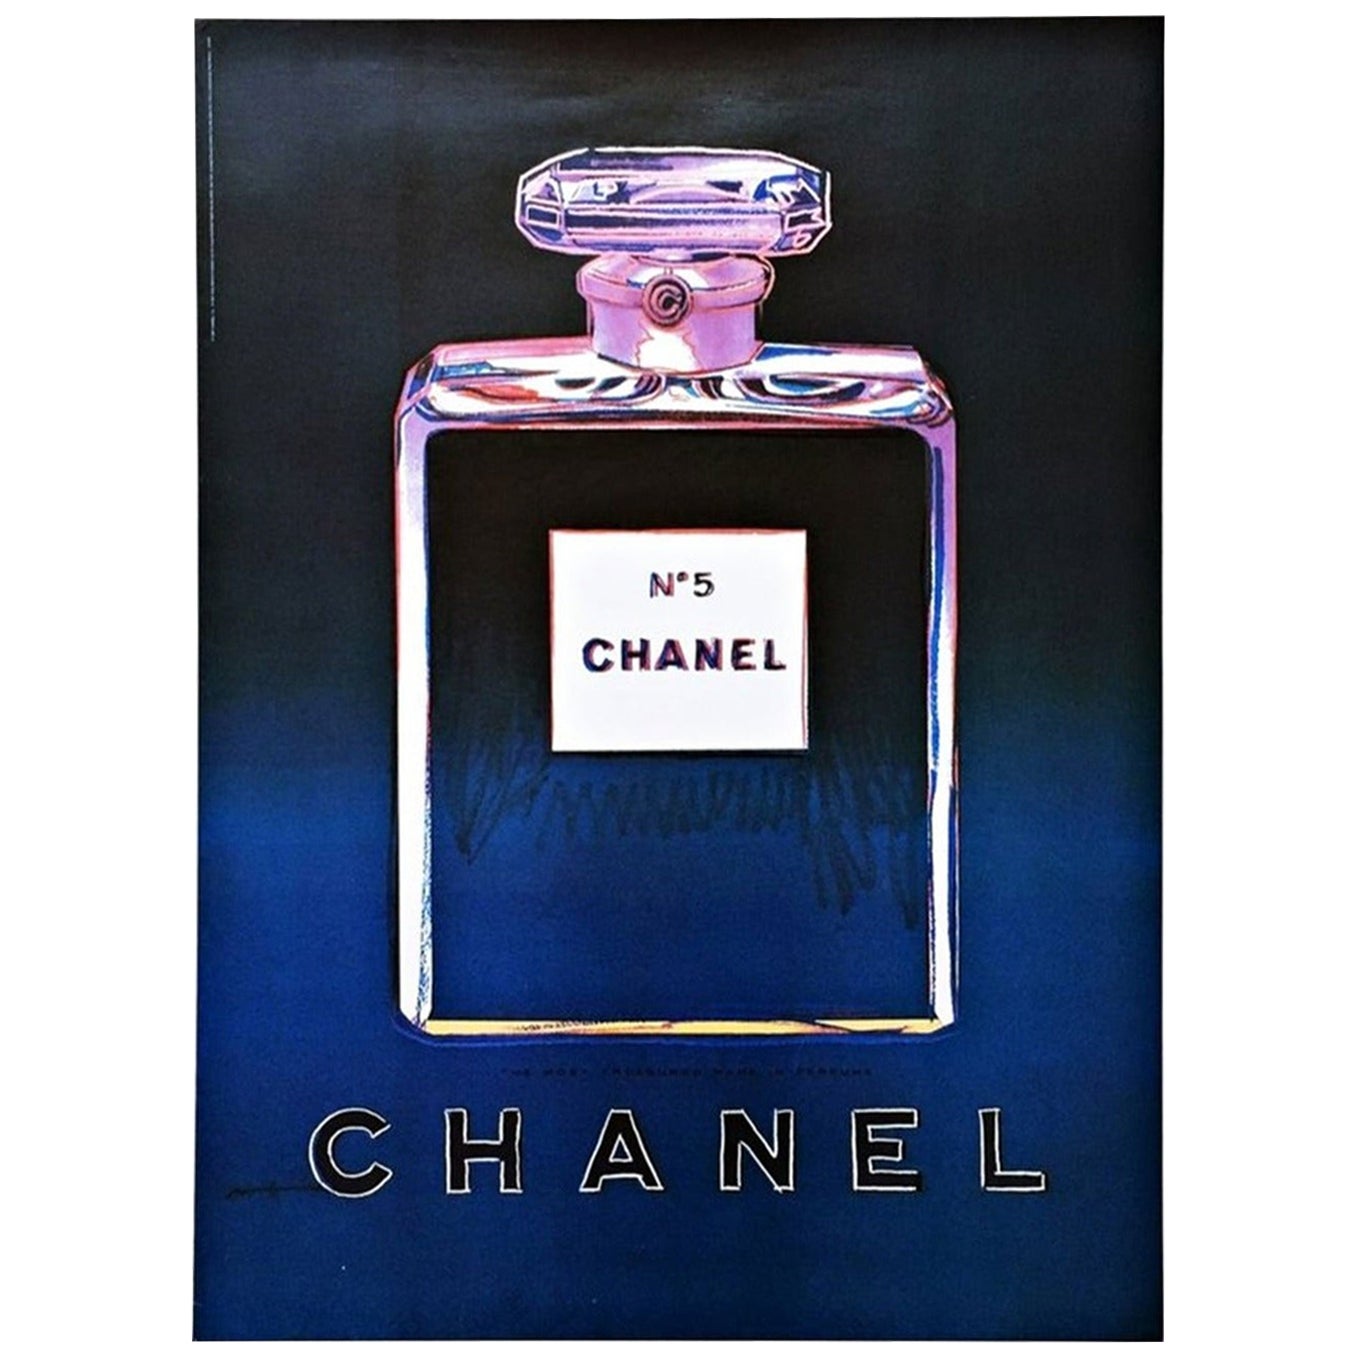 1997 Andy Warhol - Chanel Black Original Vintage Poster